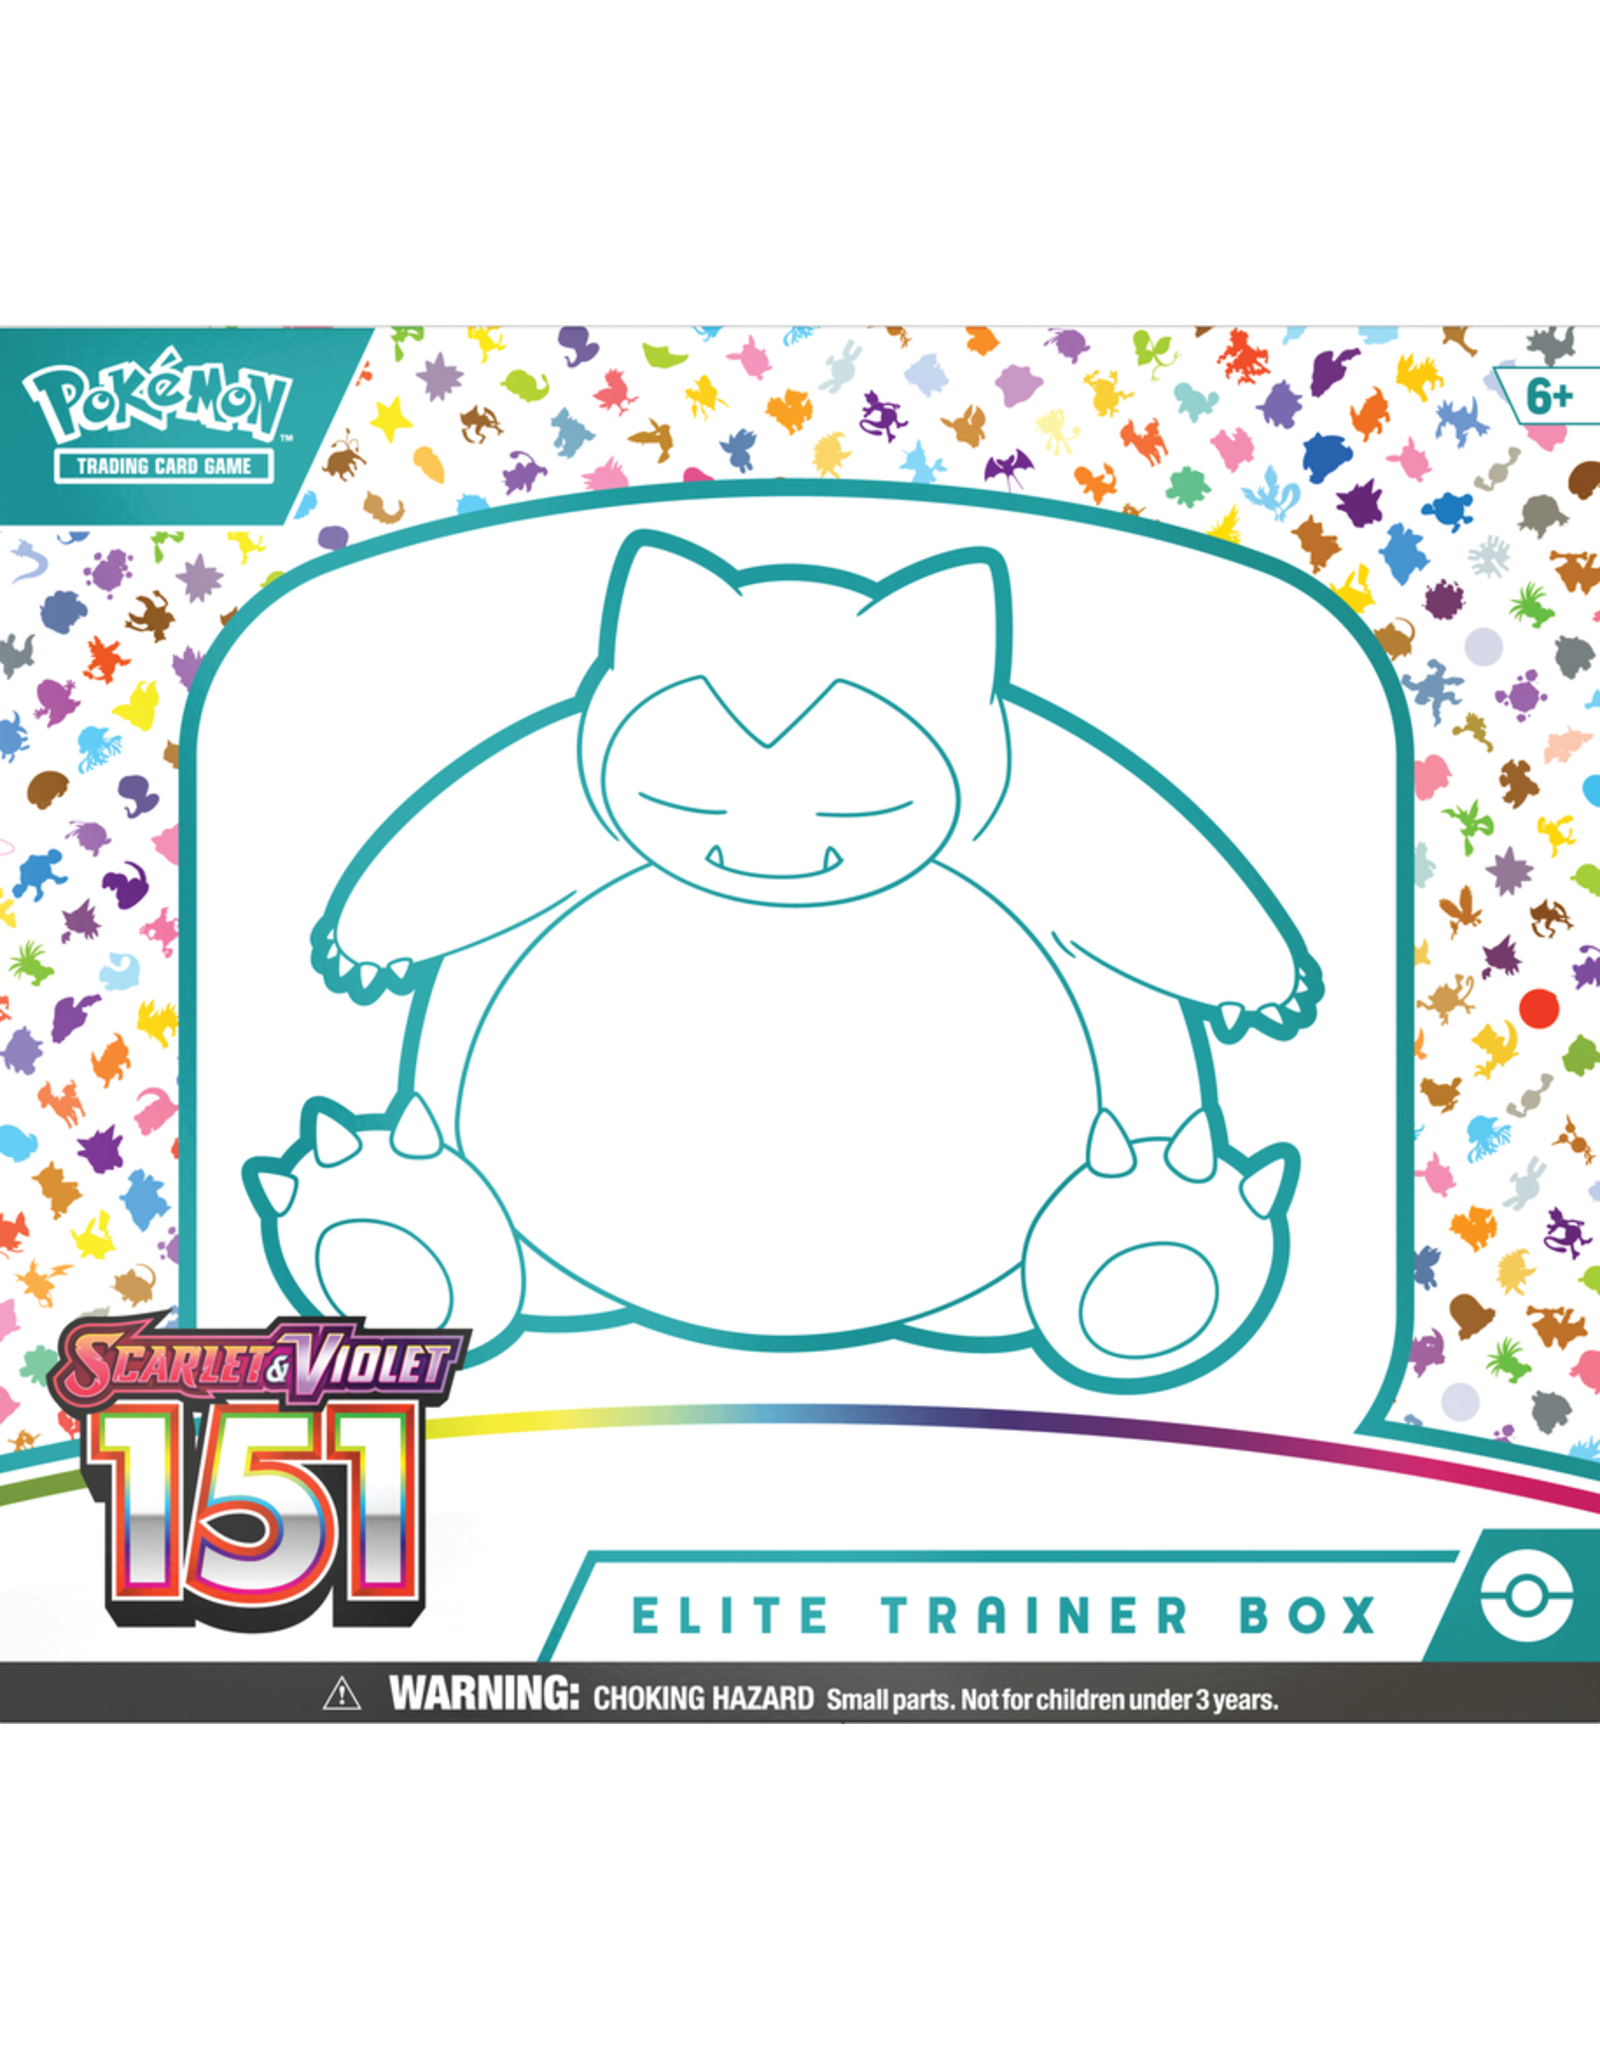 The Pokemon Company Pokémon Trading Card Game - Scarlet & Violet 151 Collection Elite Trainer Box